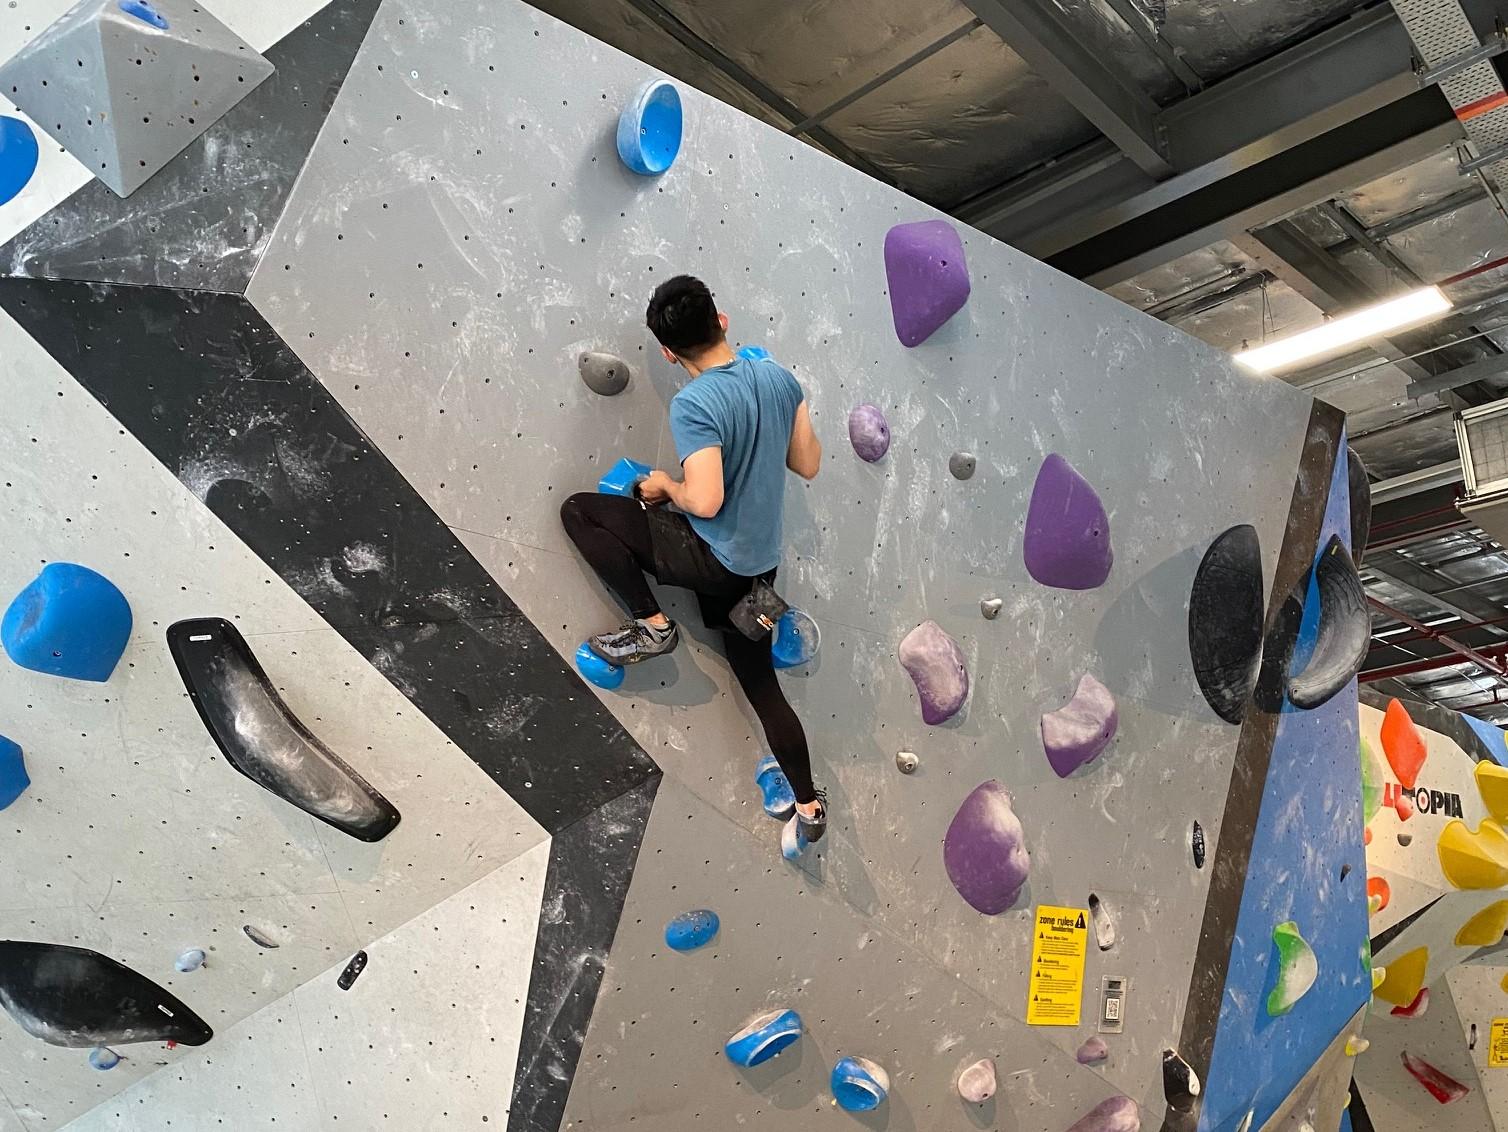 https://theamateurclimber.com/wp-content/uploads/2023/02/what-to-wear-rock-climbing-1.jpg